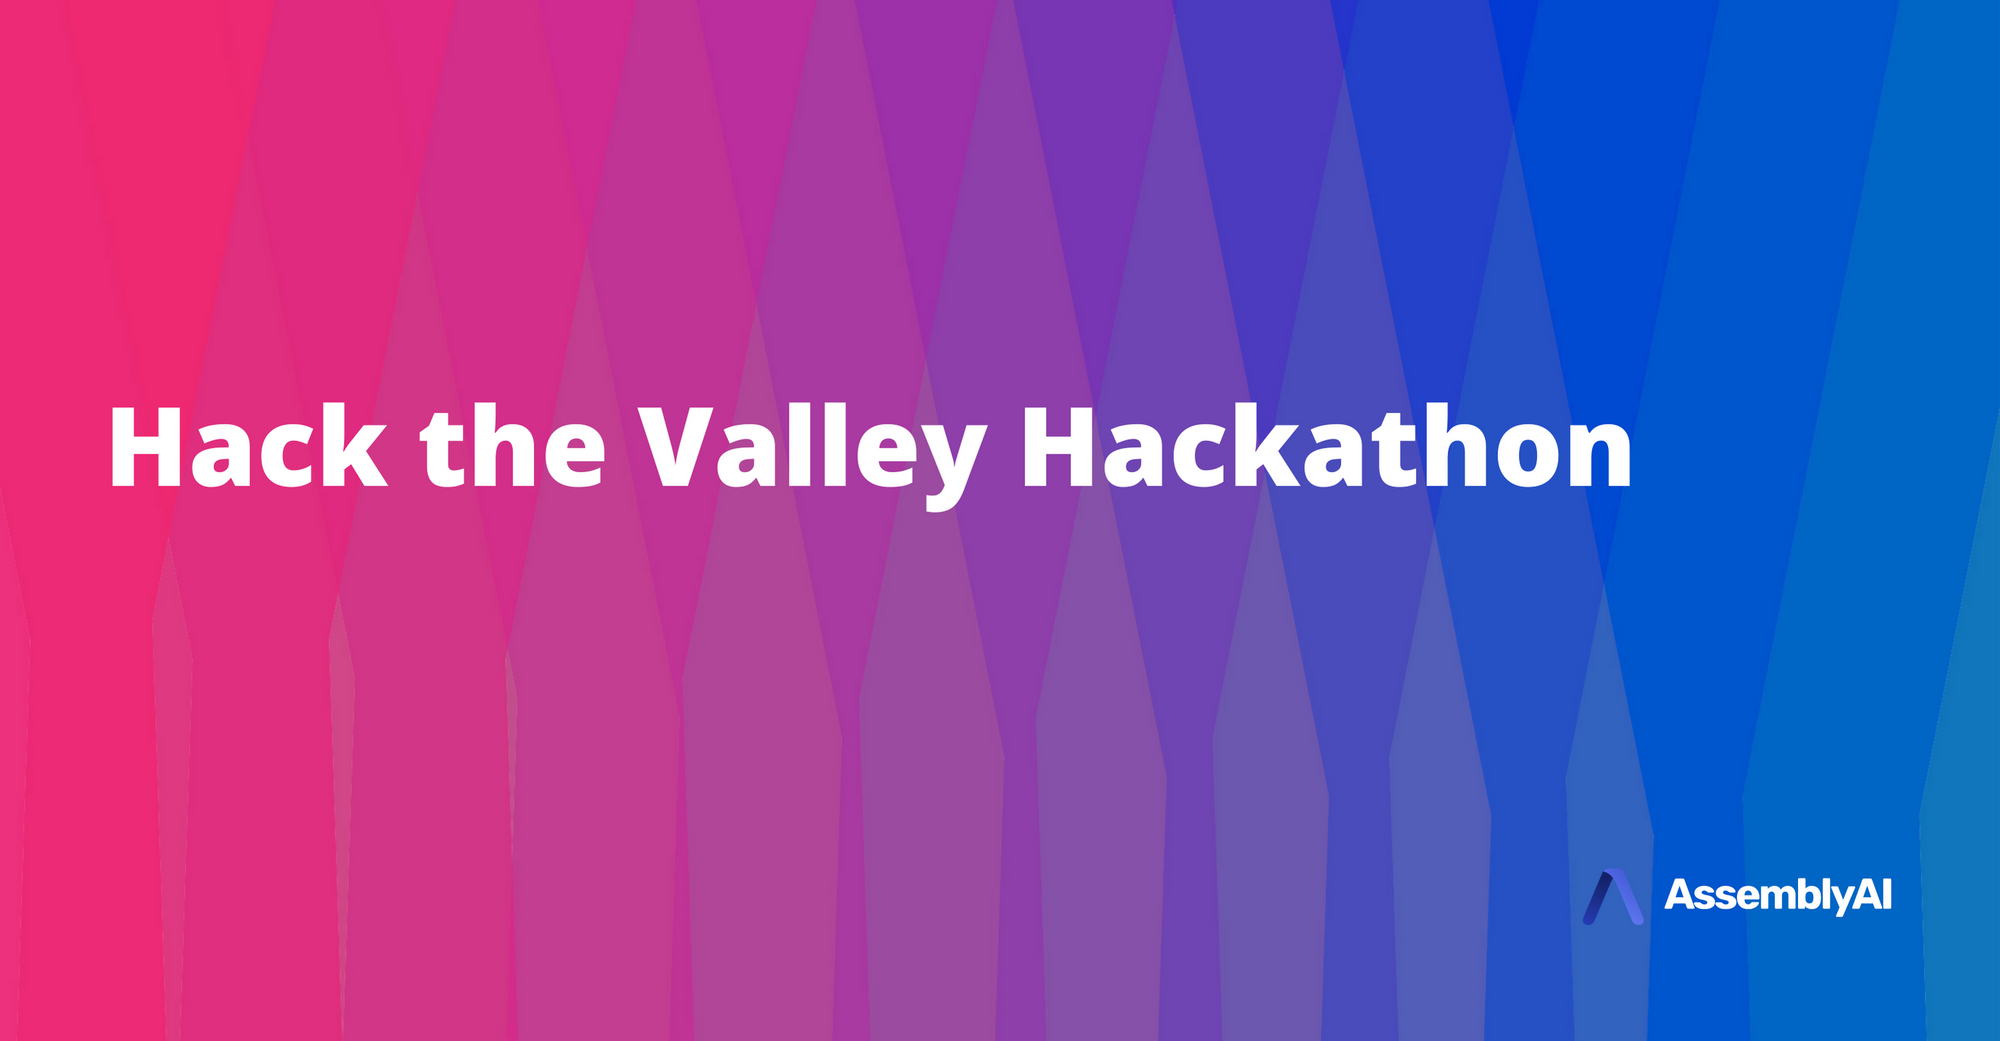 Hack the Valley - AssemblyAI at University of Toronto Hackathon